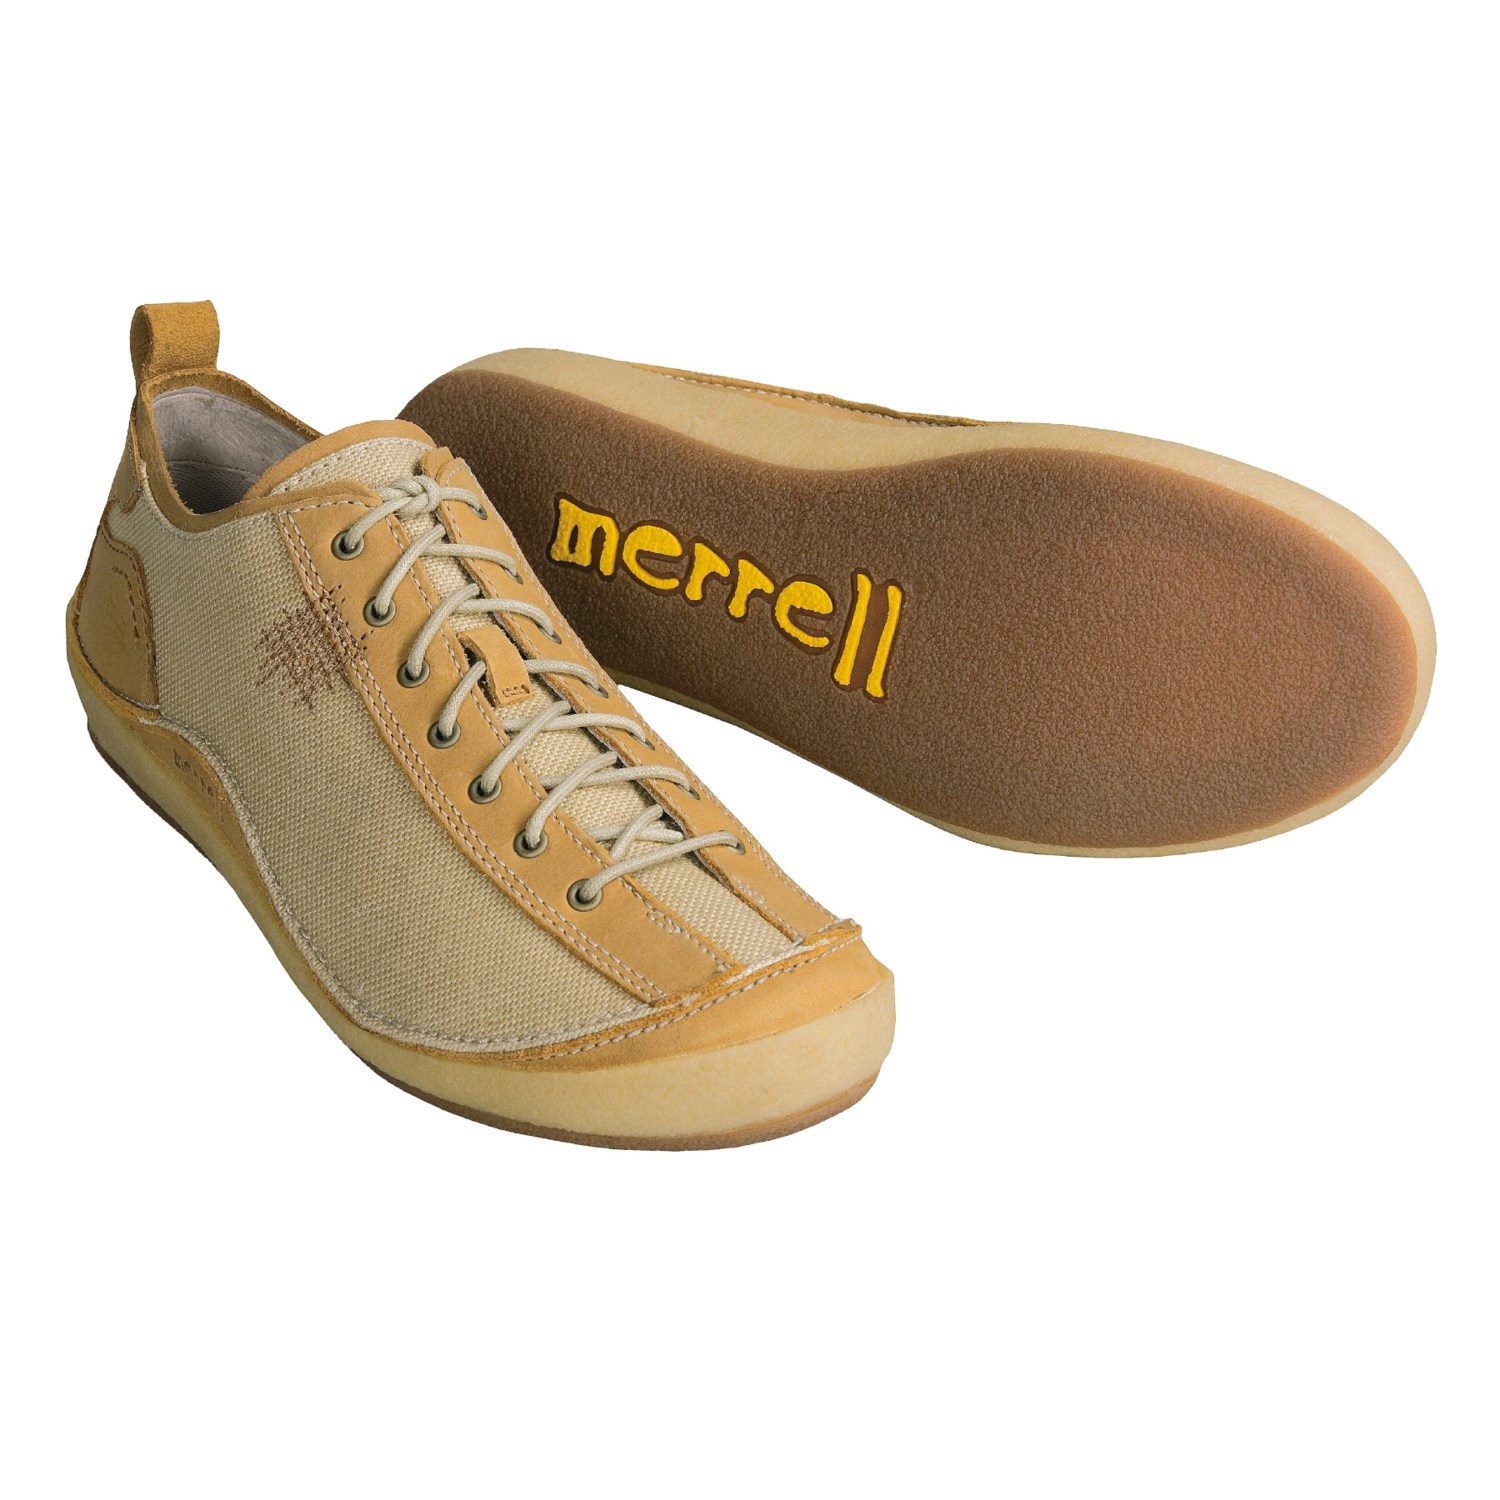 Merrell Shoes Barcelona